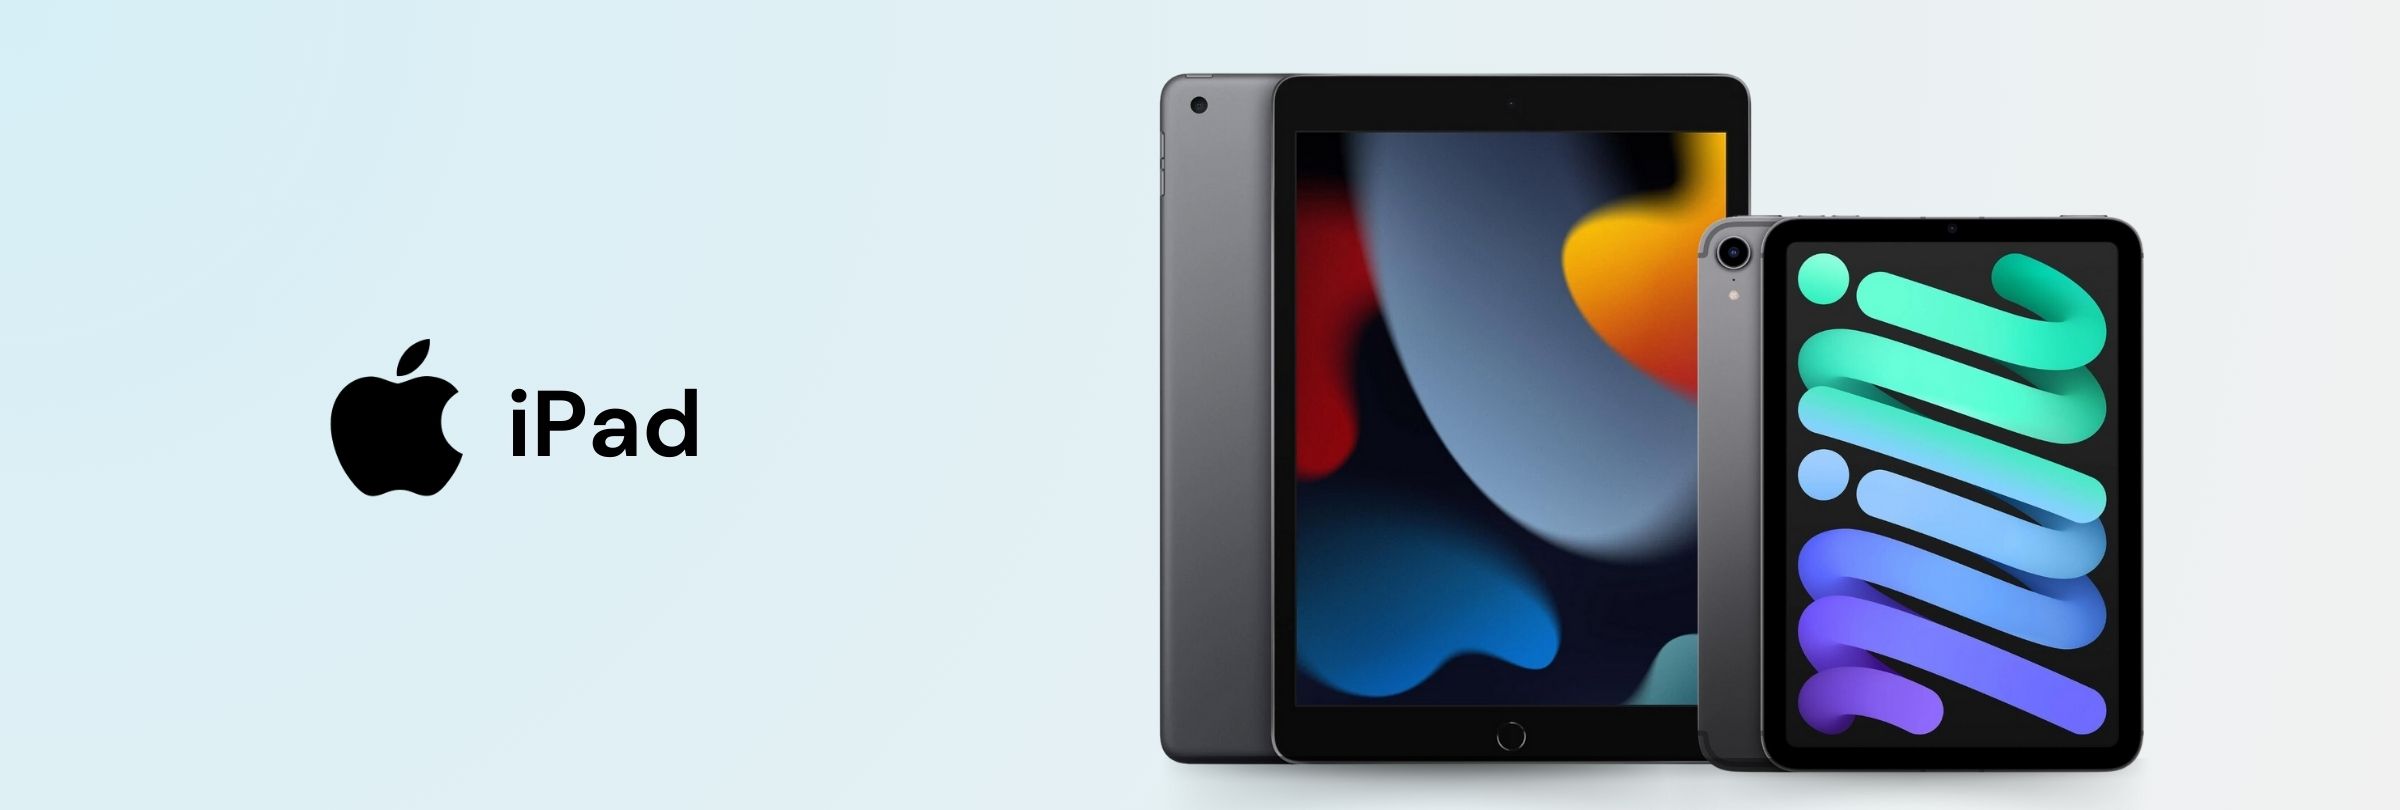 Apple iPad - Buy Unlocked iPad Online in Australia | Price